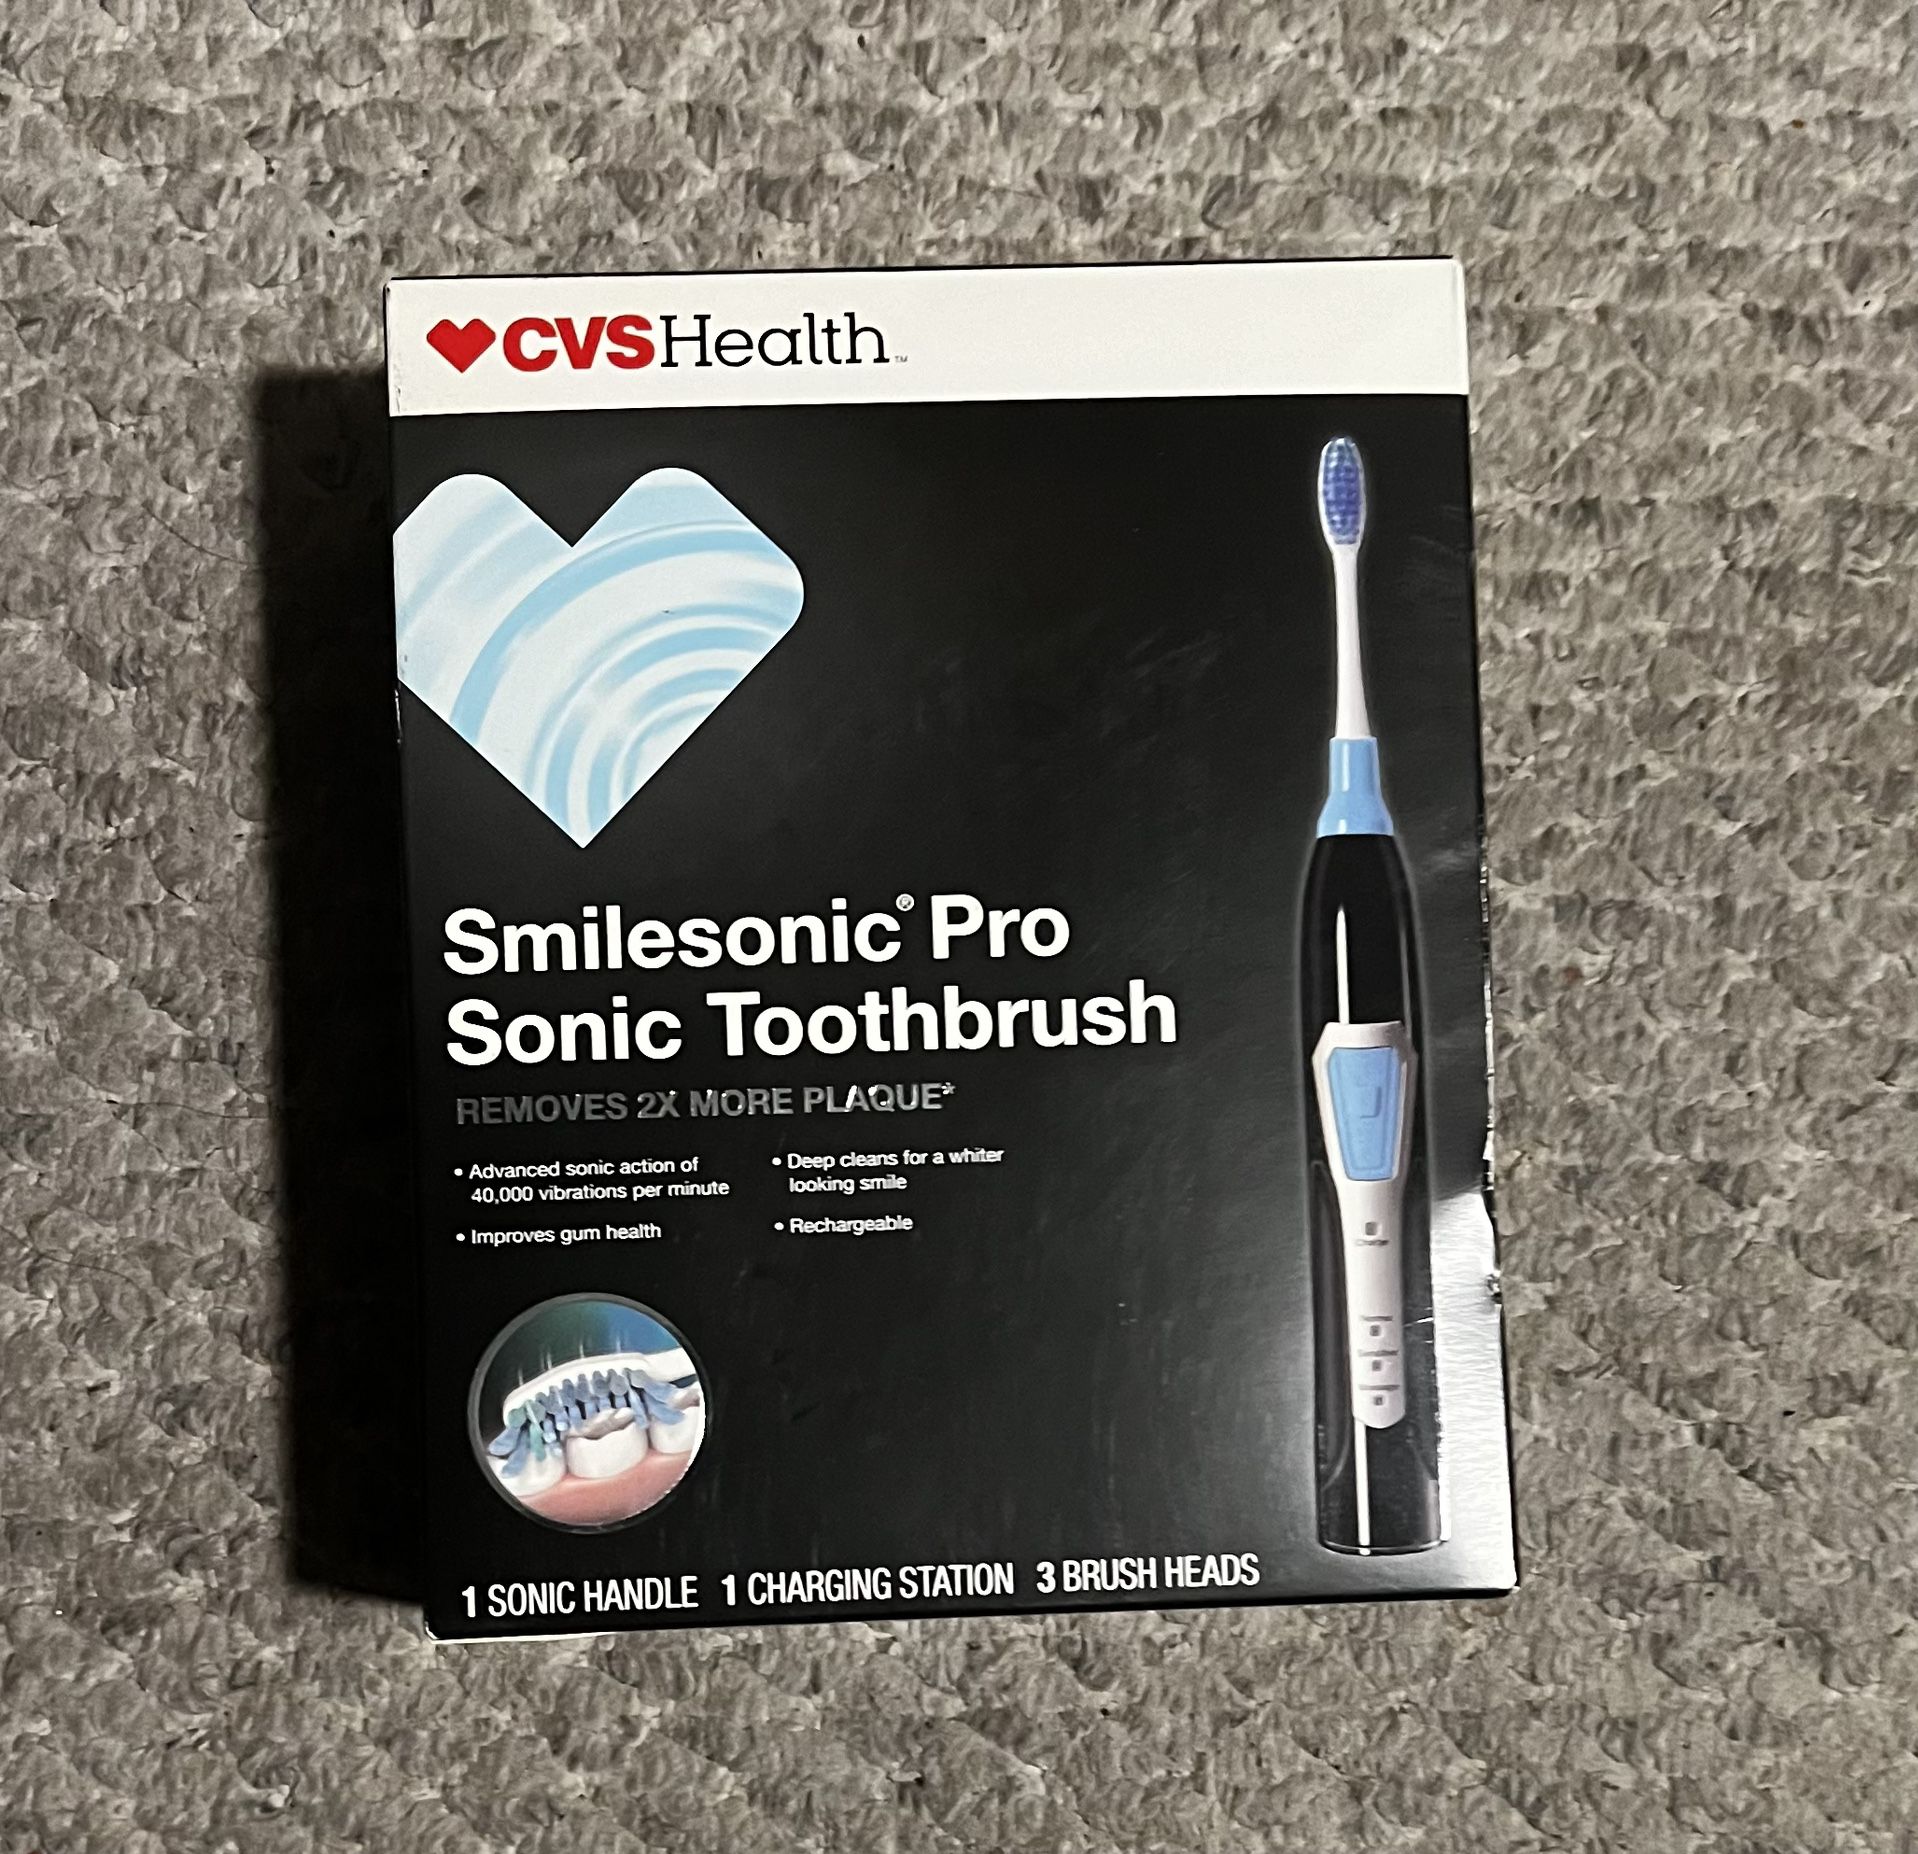 CVS Smile Sonic Pro Toothbrush